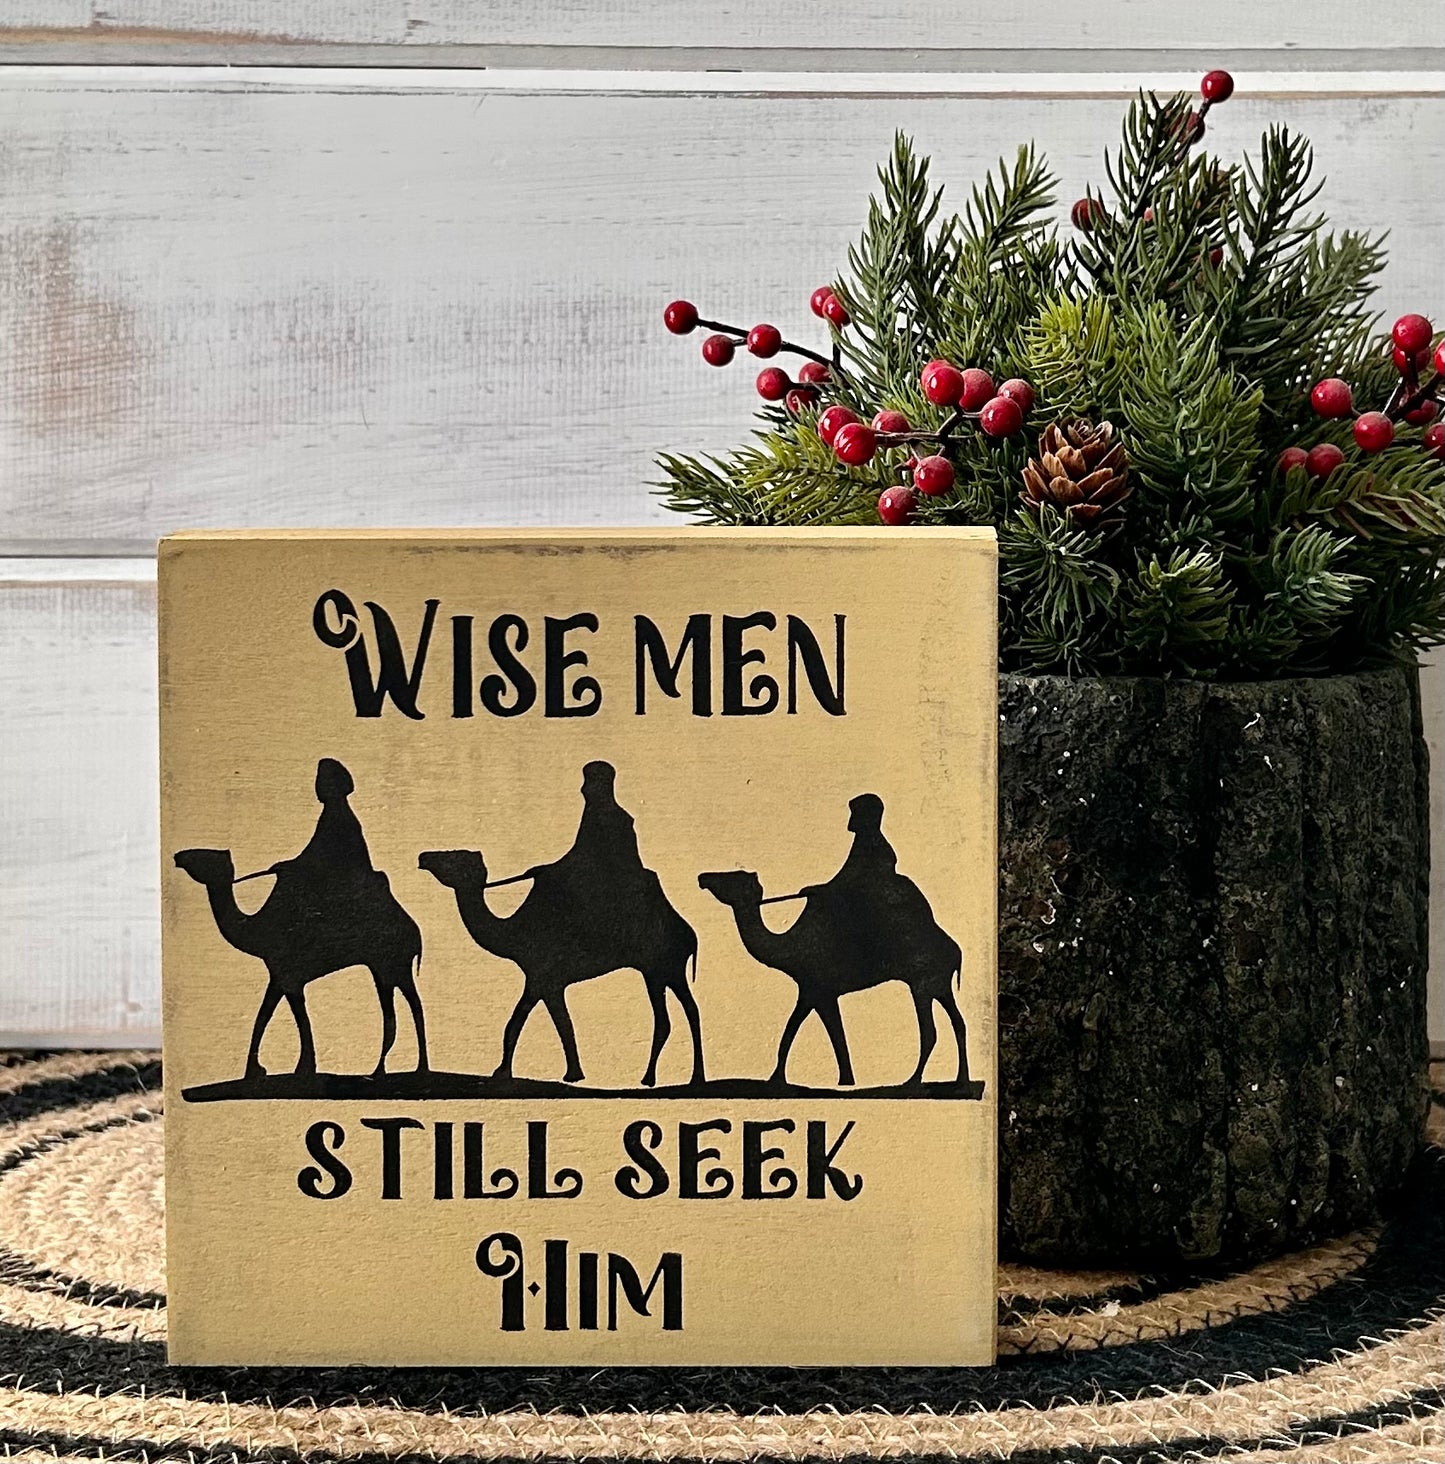 "wise men" wood sign